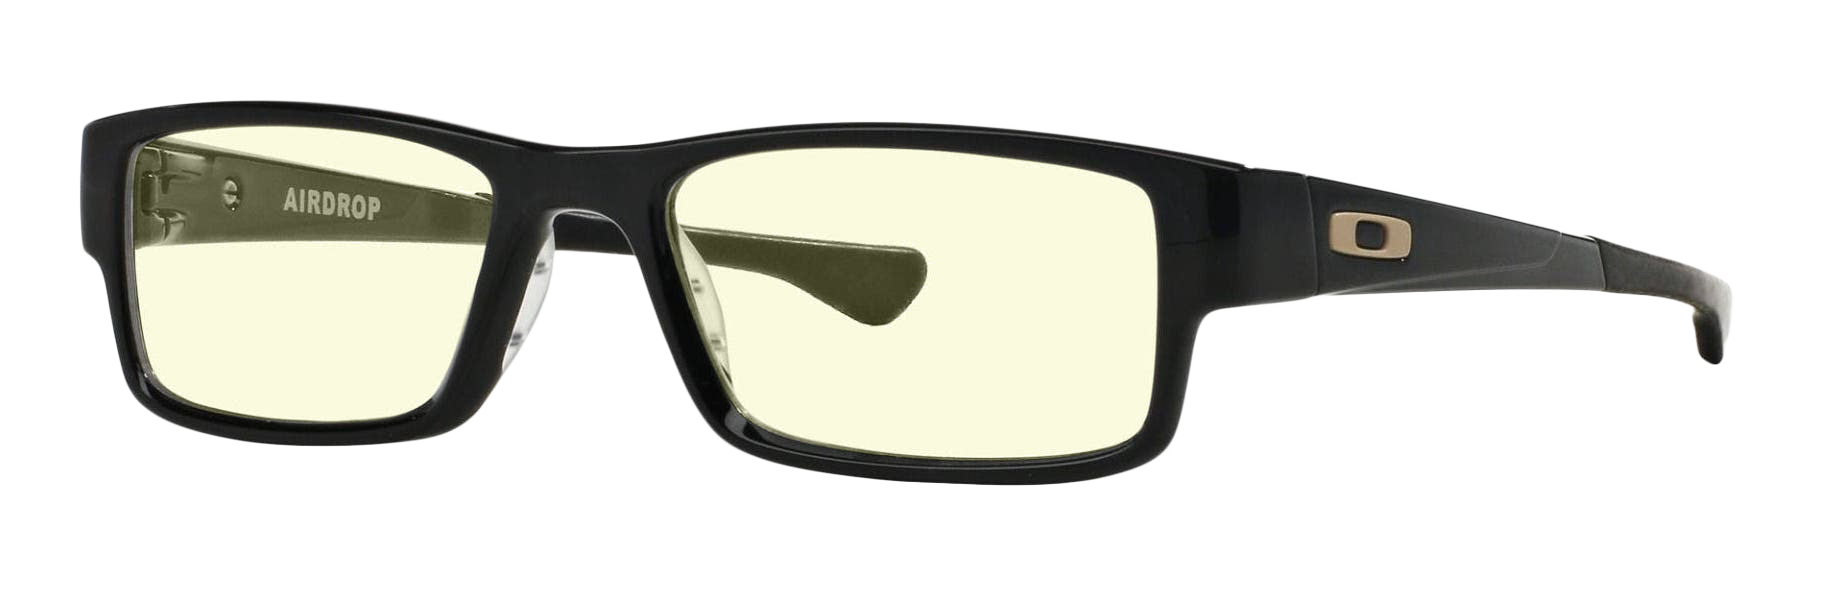 Oakley Airdrop eyeglasses in black with Oakley PRIZM gaming blue light lenses.